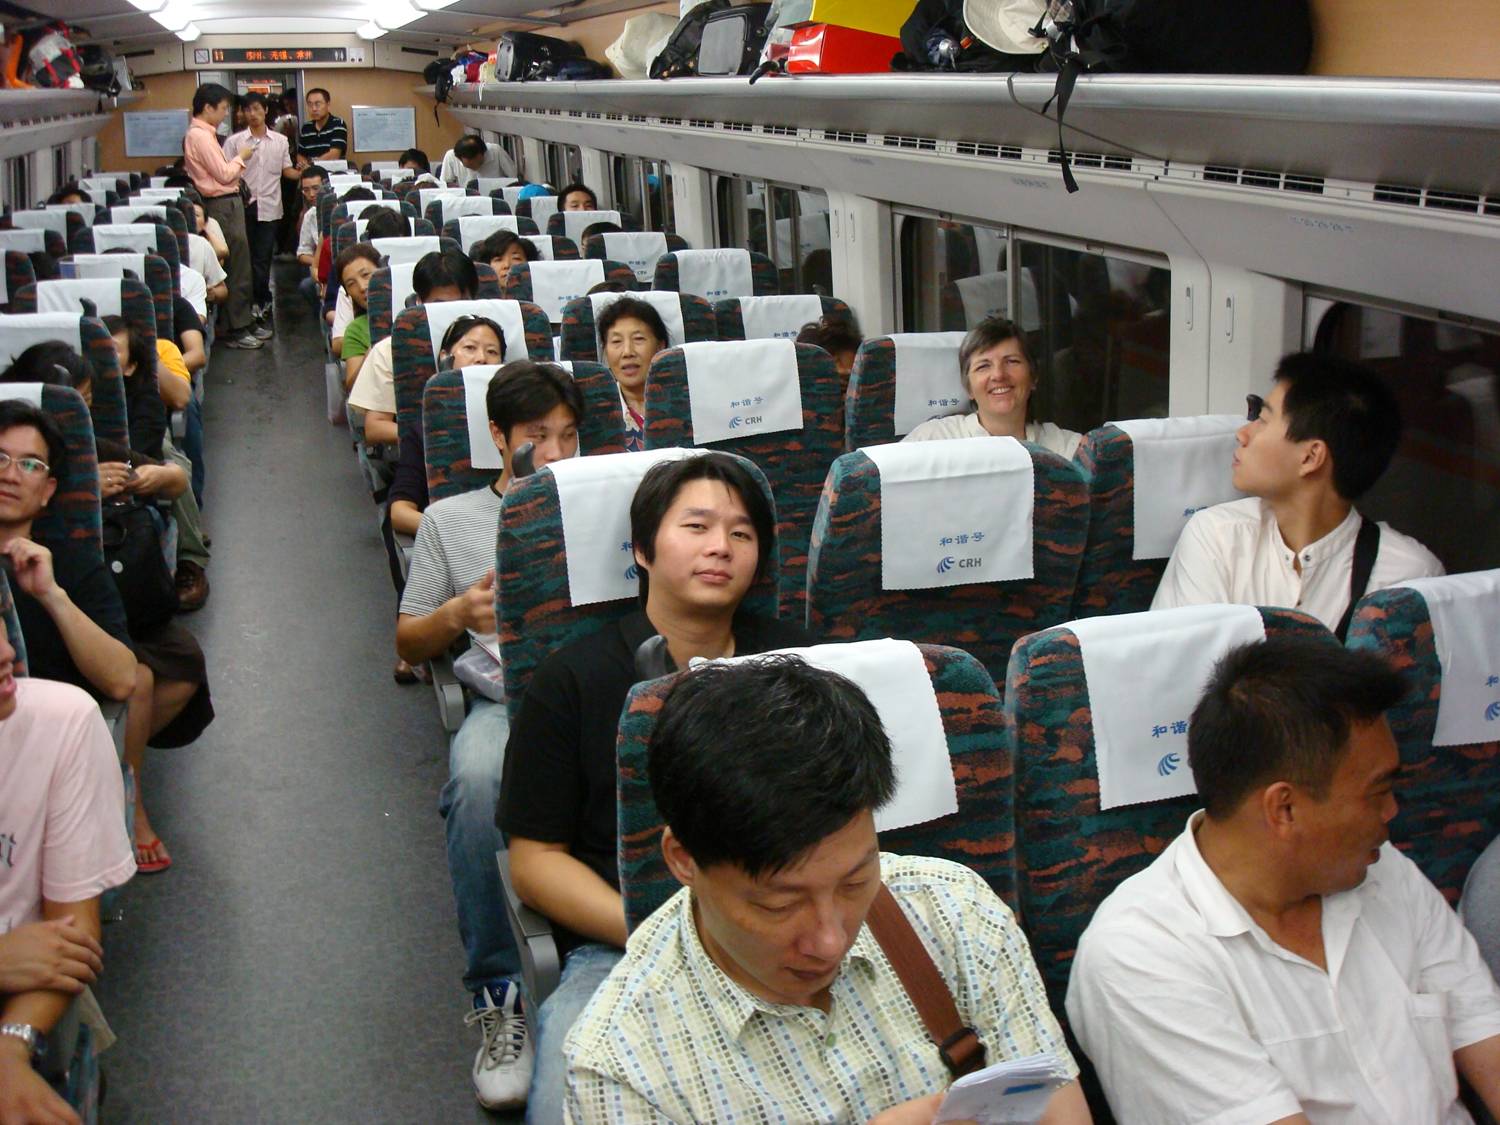 on board the fast train Nanjing to Shanghai